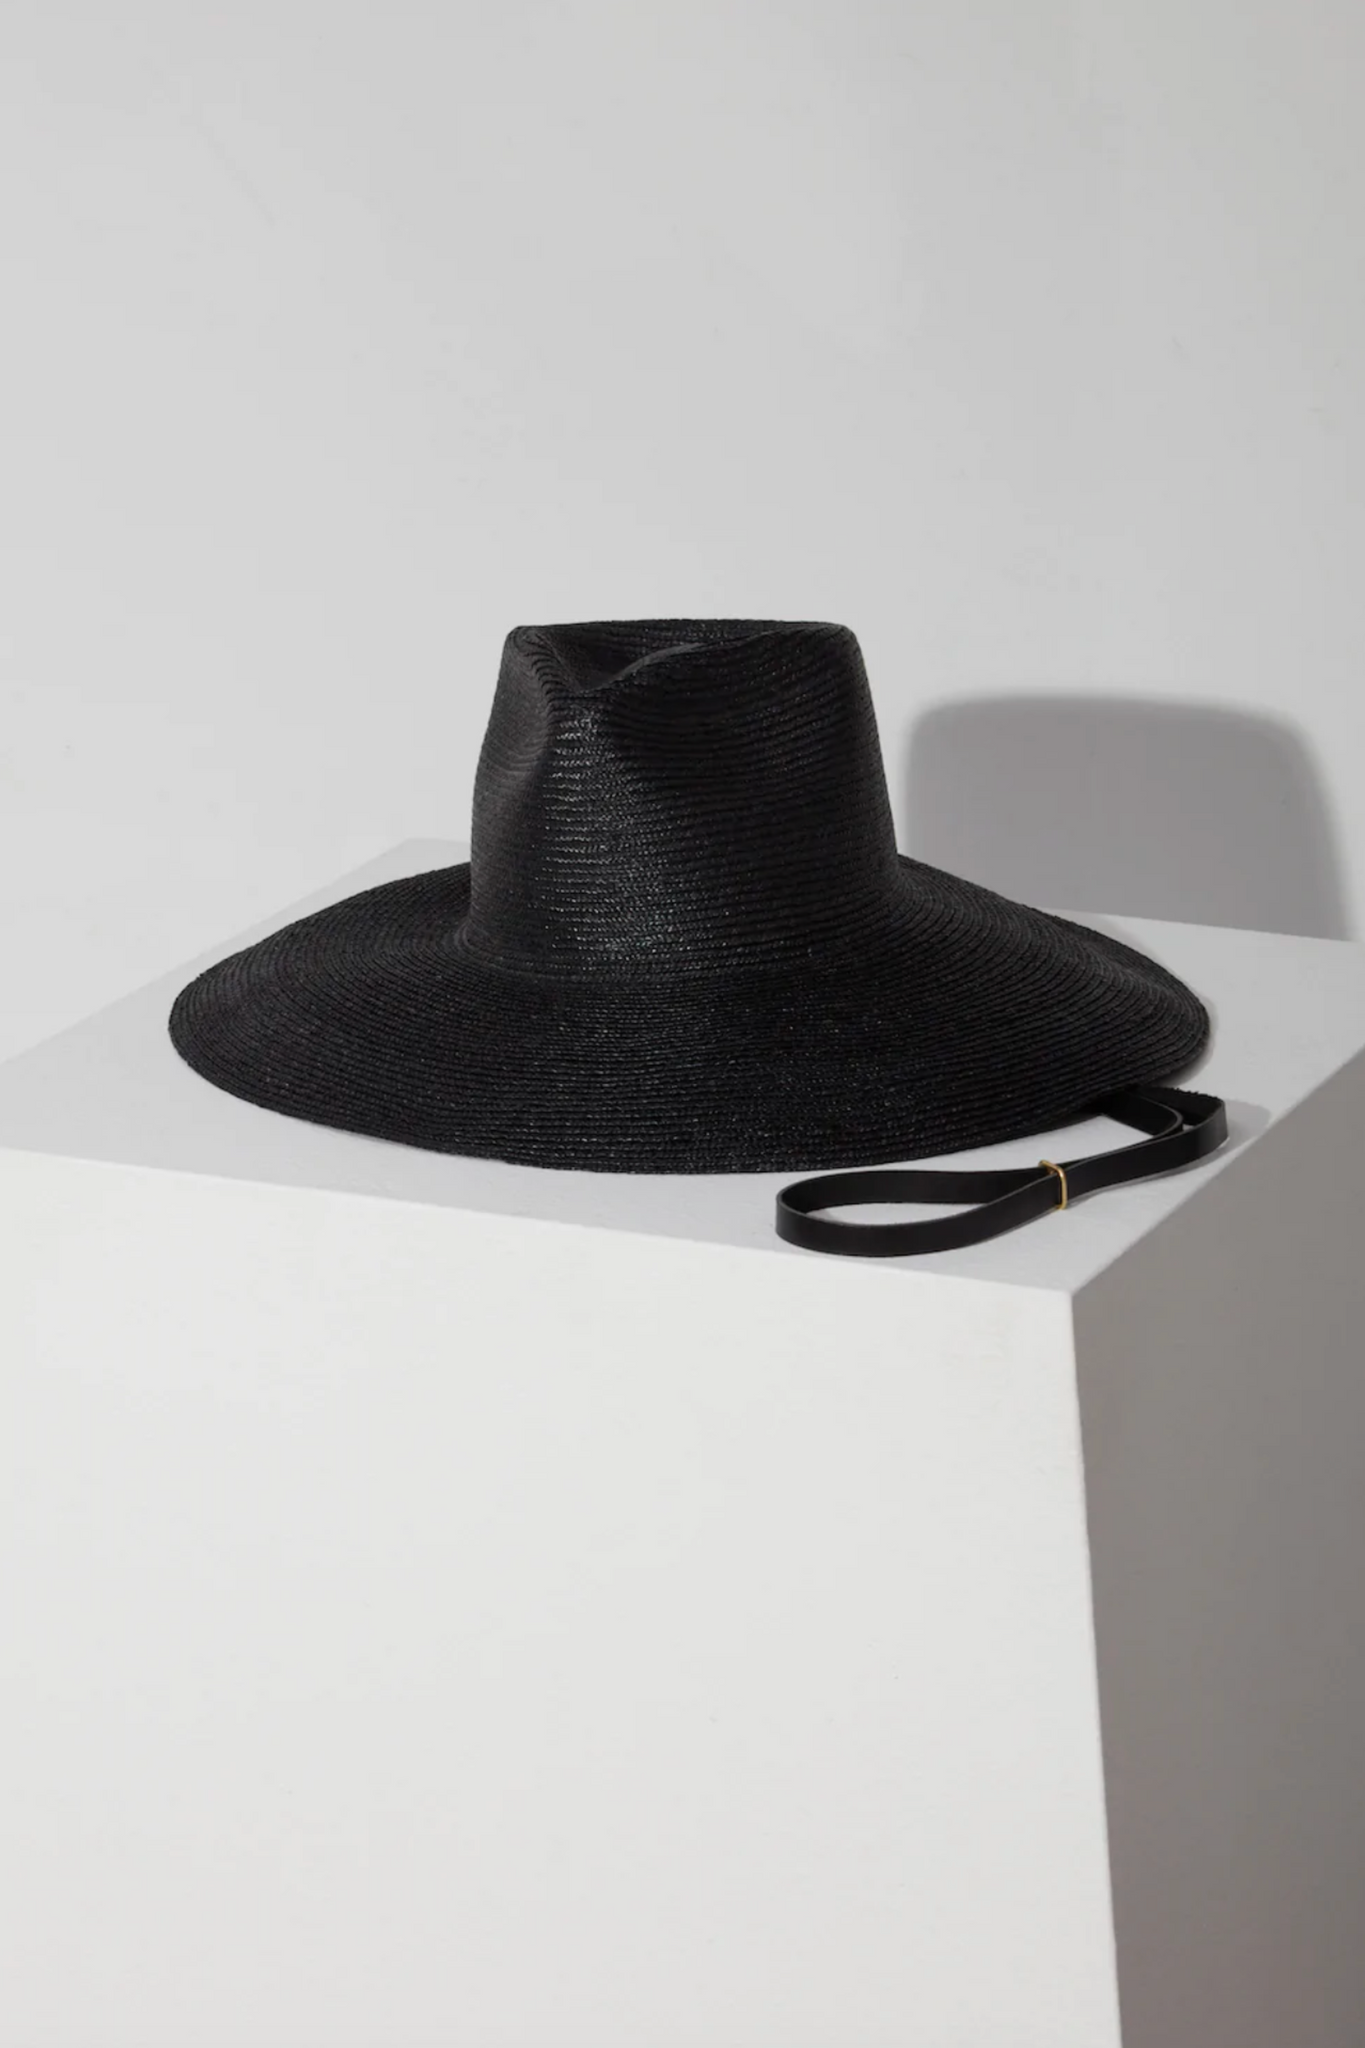 Janessa Leoné - Kennedy Hat, Black